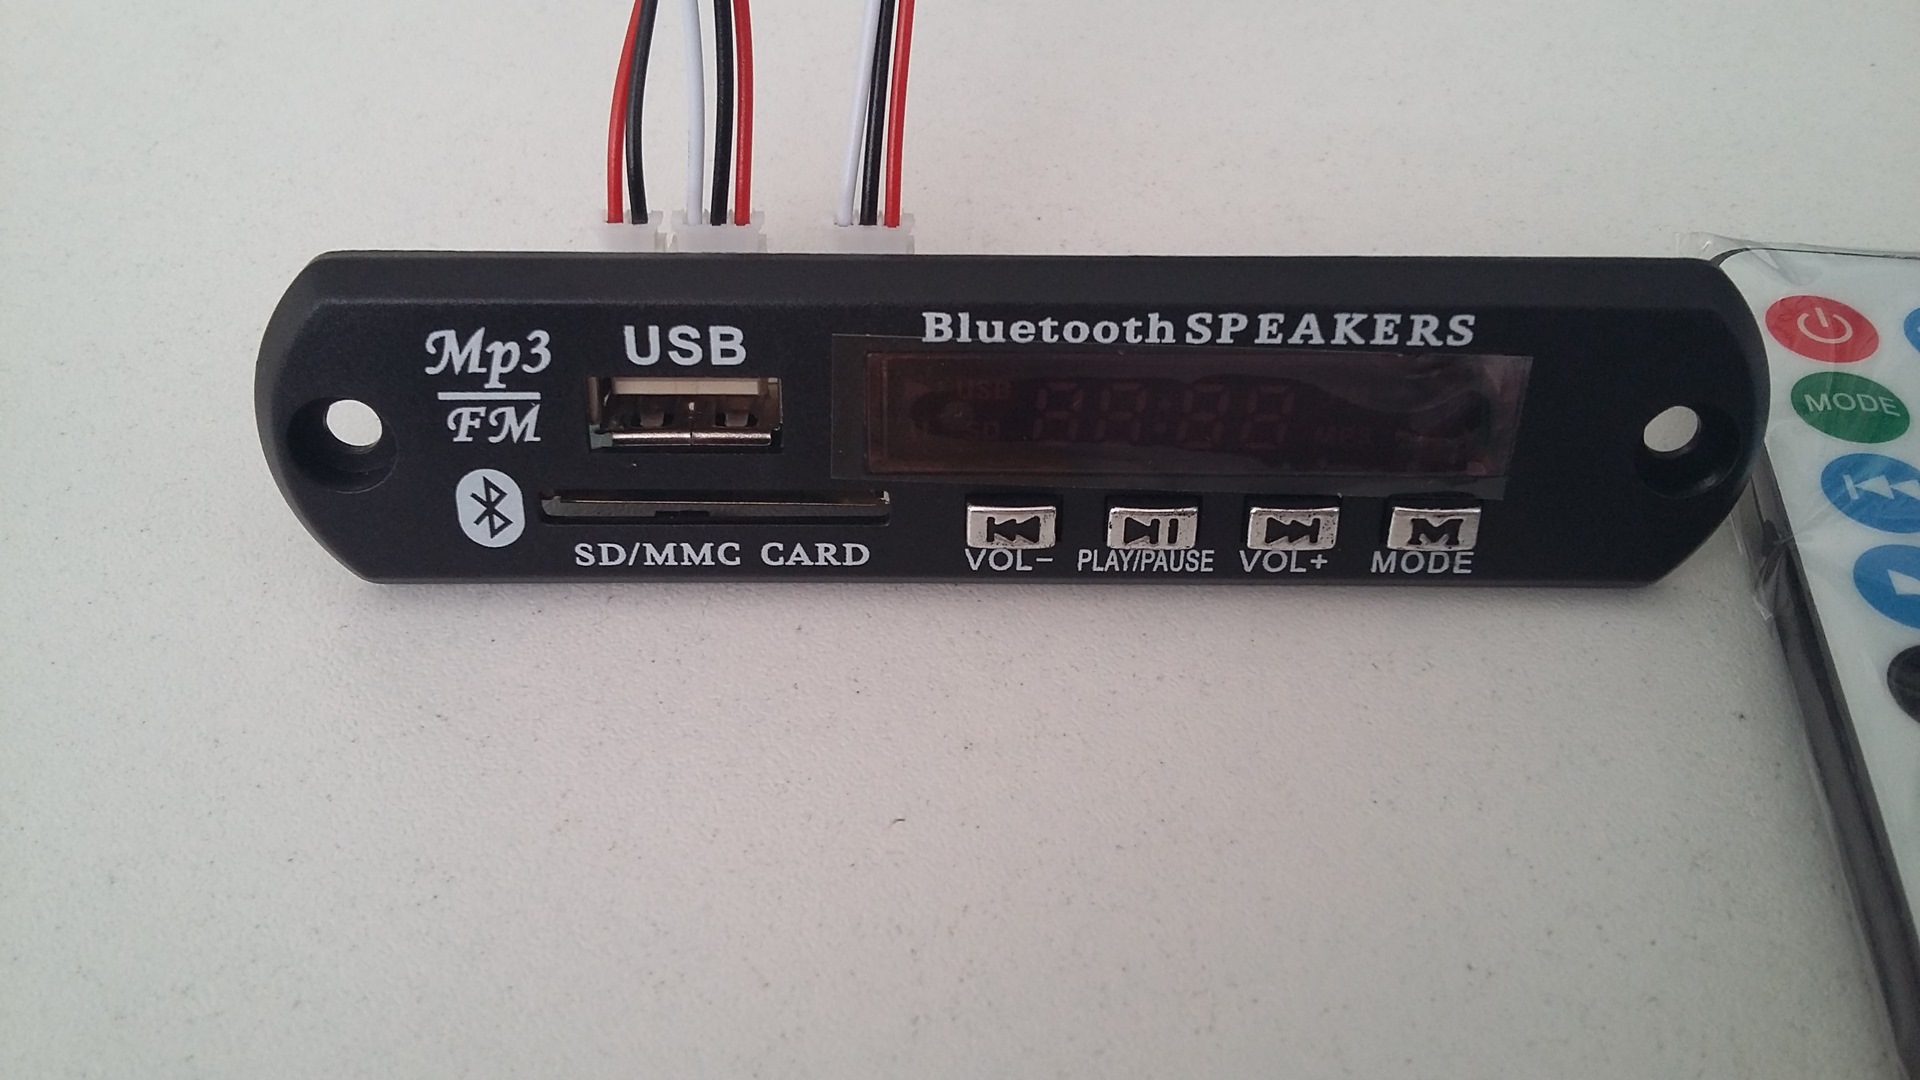 Модуль usb mp3 fm. Блютуз проигрыватель для музыкального центра. USB проигрыватель для музыкального центра. Переключение на USB проигрыватель. Mp3/USB-проигрыватель в экскаваторе.